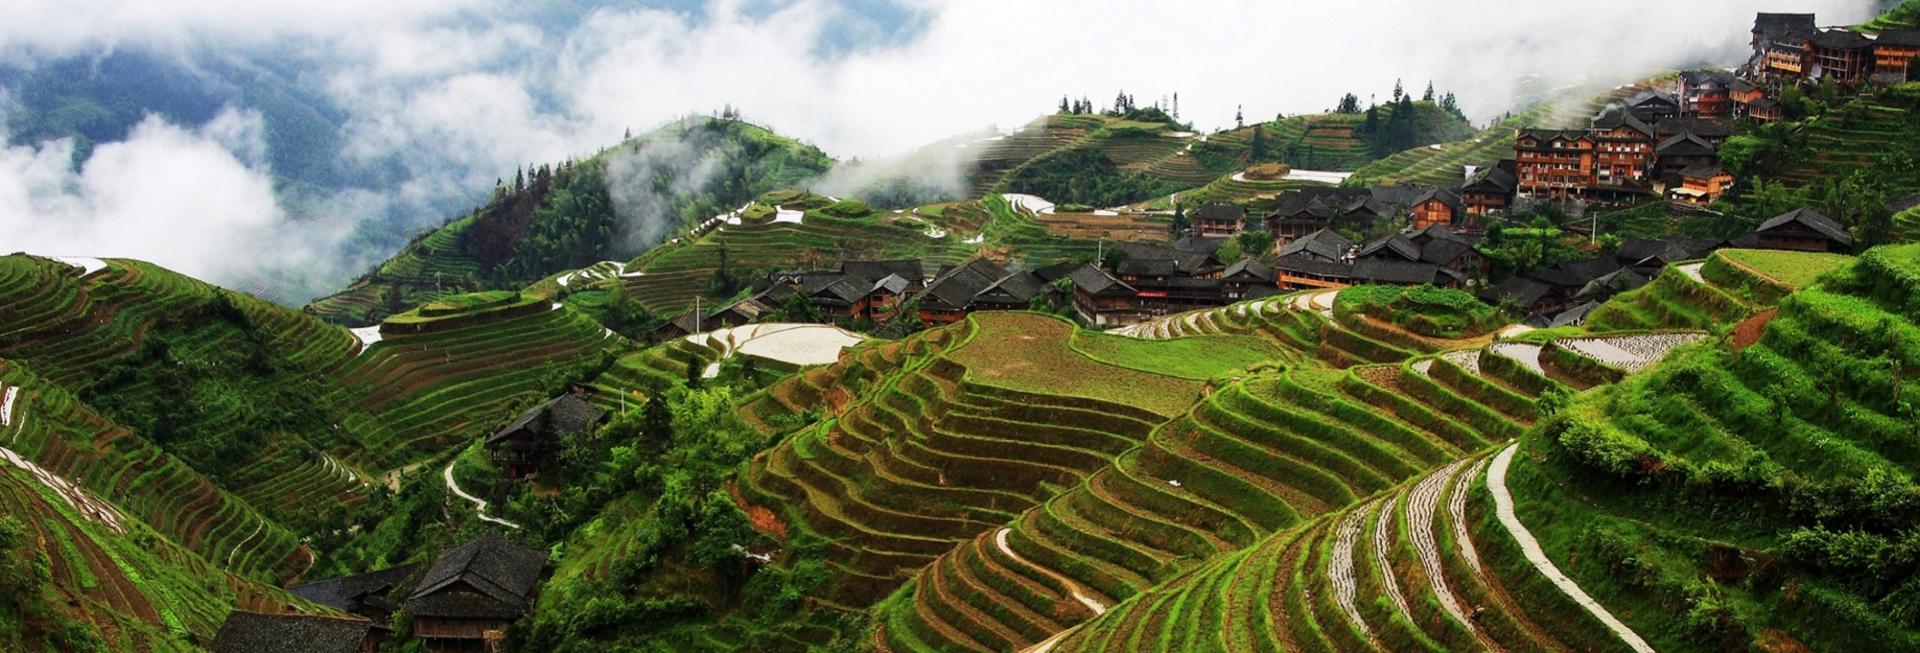 Longi Rice Terraces